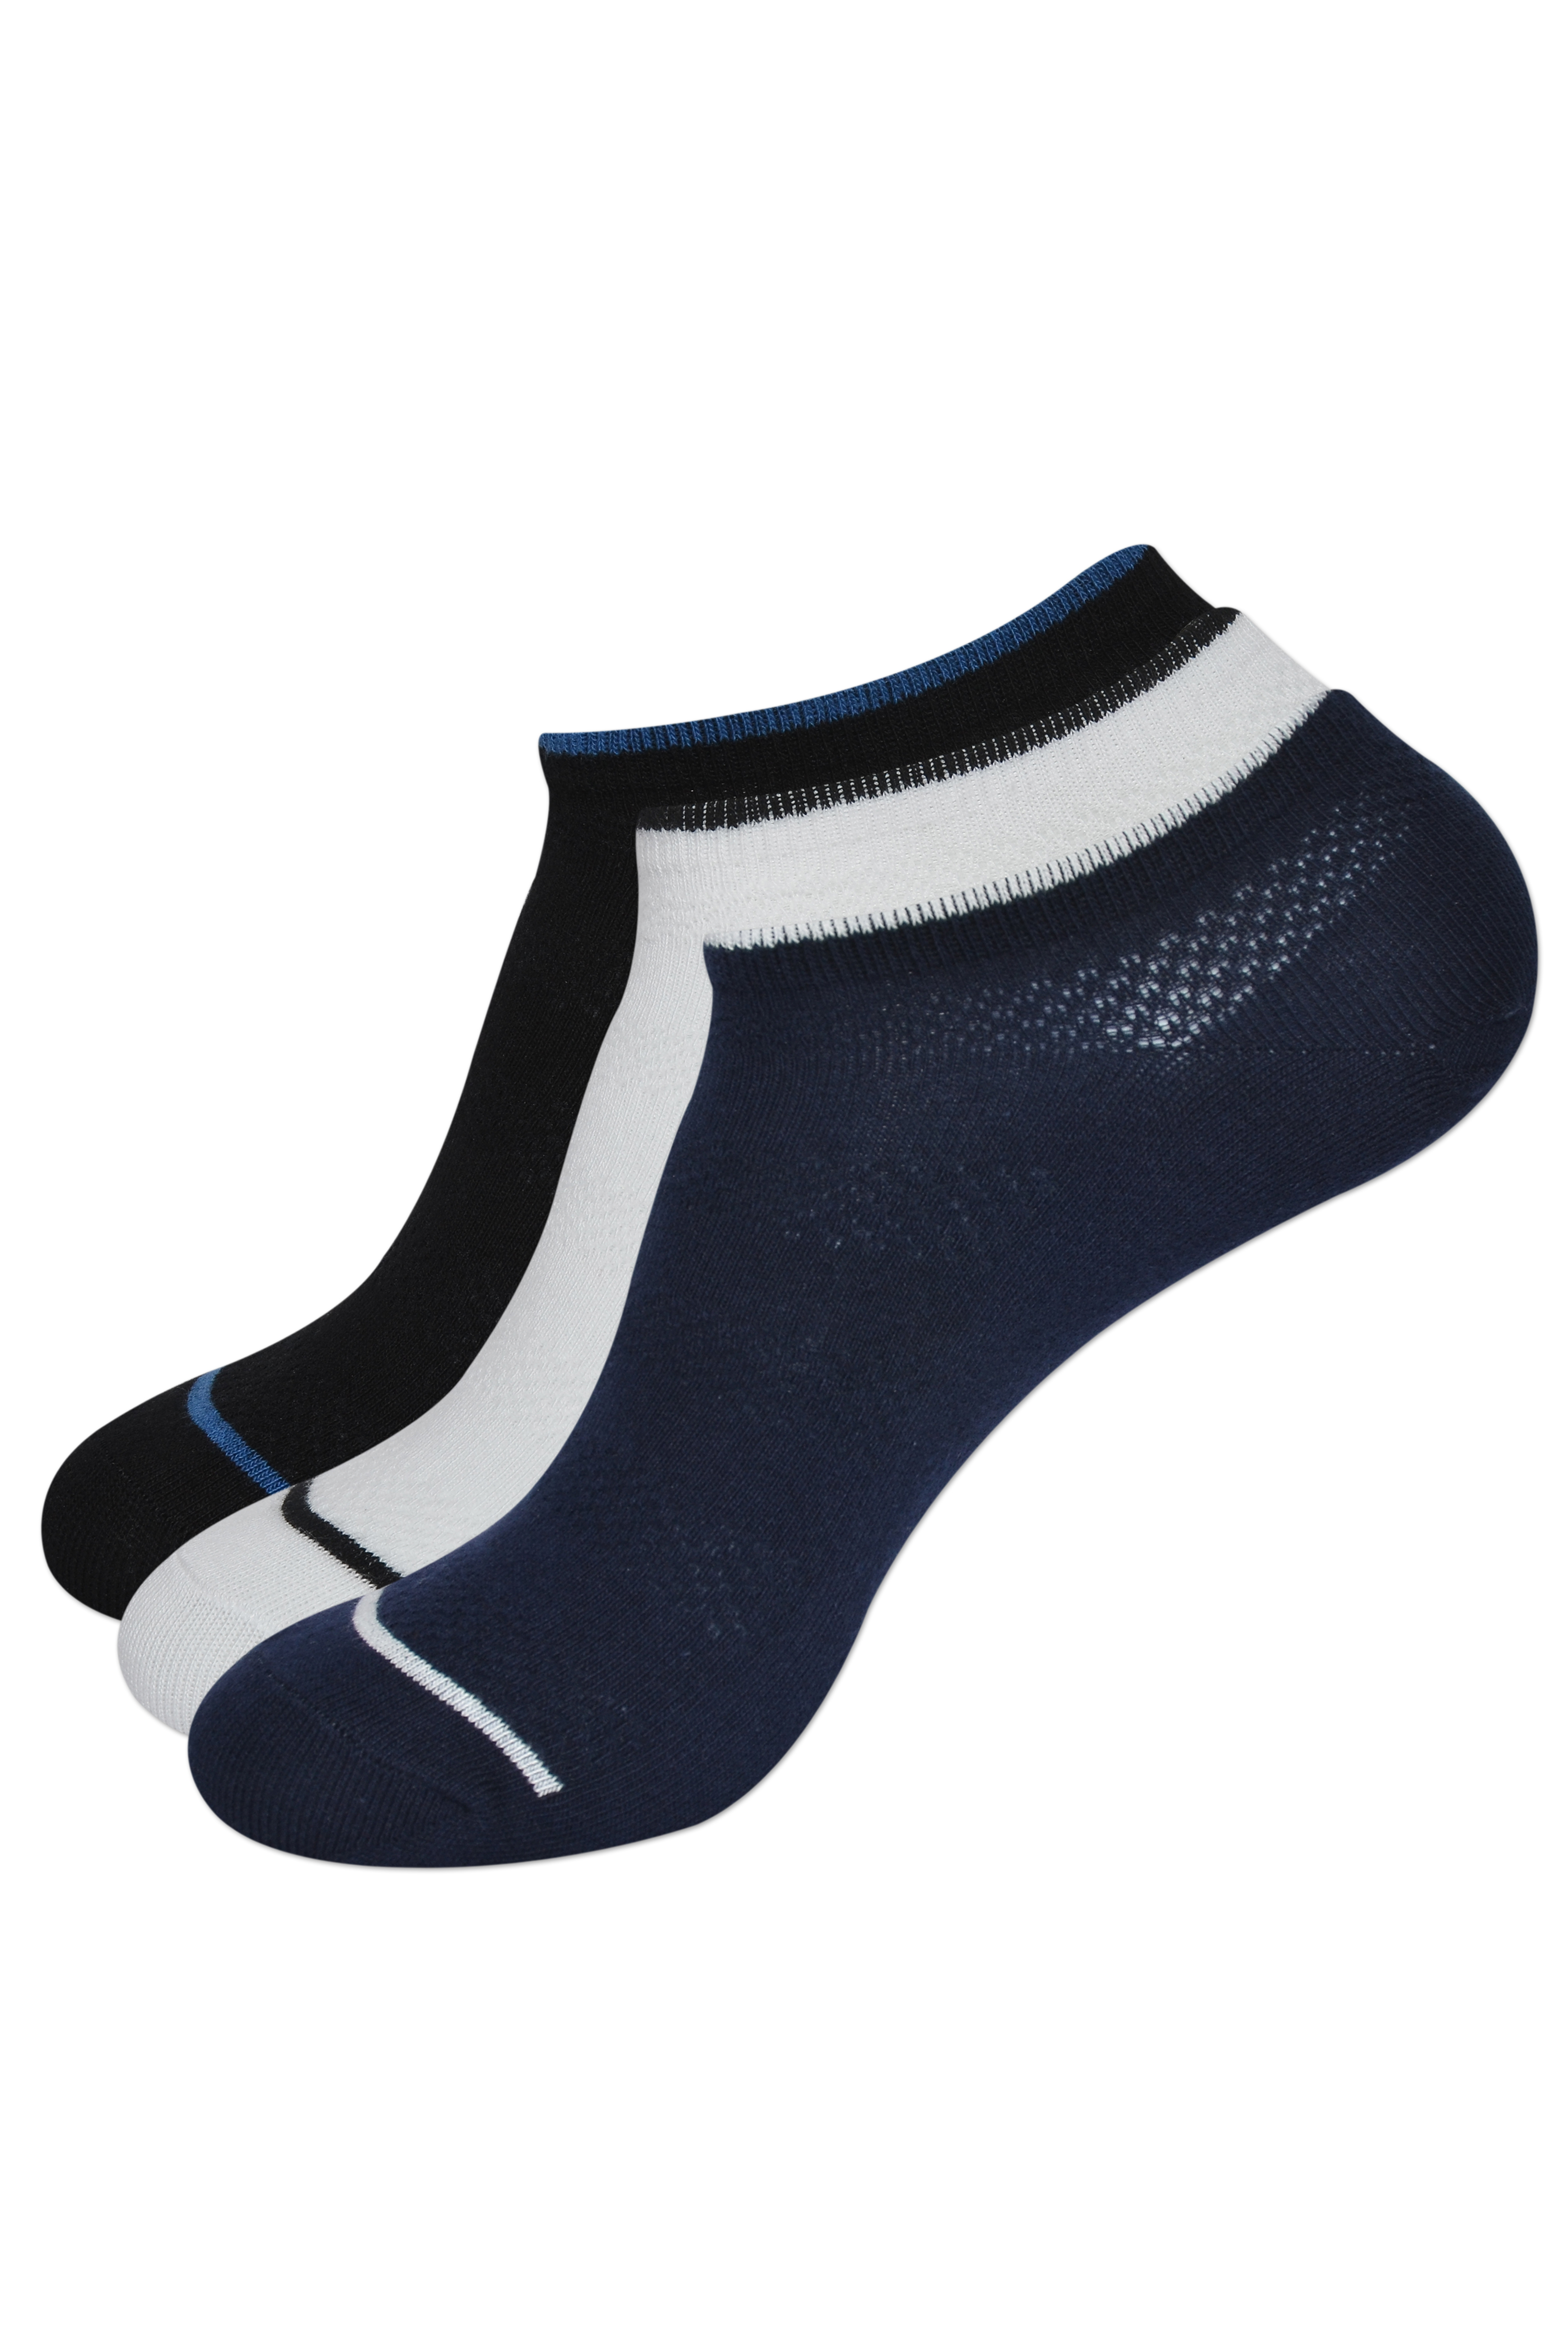 Buy Jagmini149 Balenzia Men's Pack of 3 Low Cut Socks- Assorted Online ...